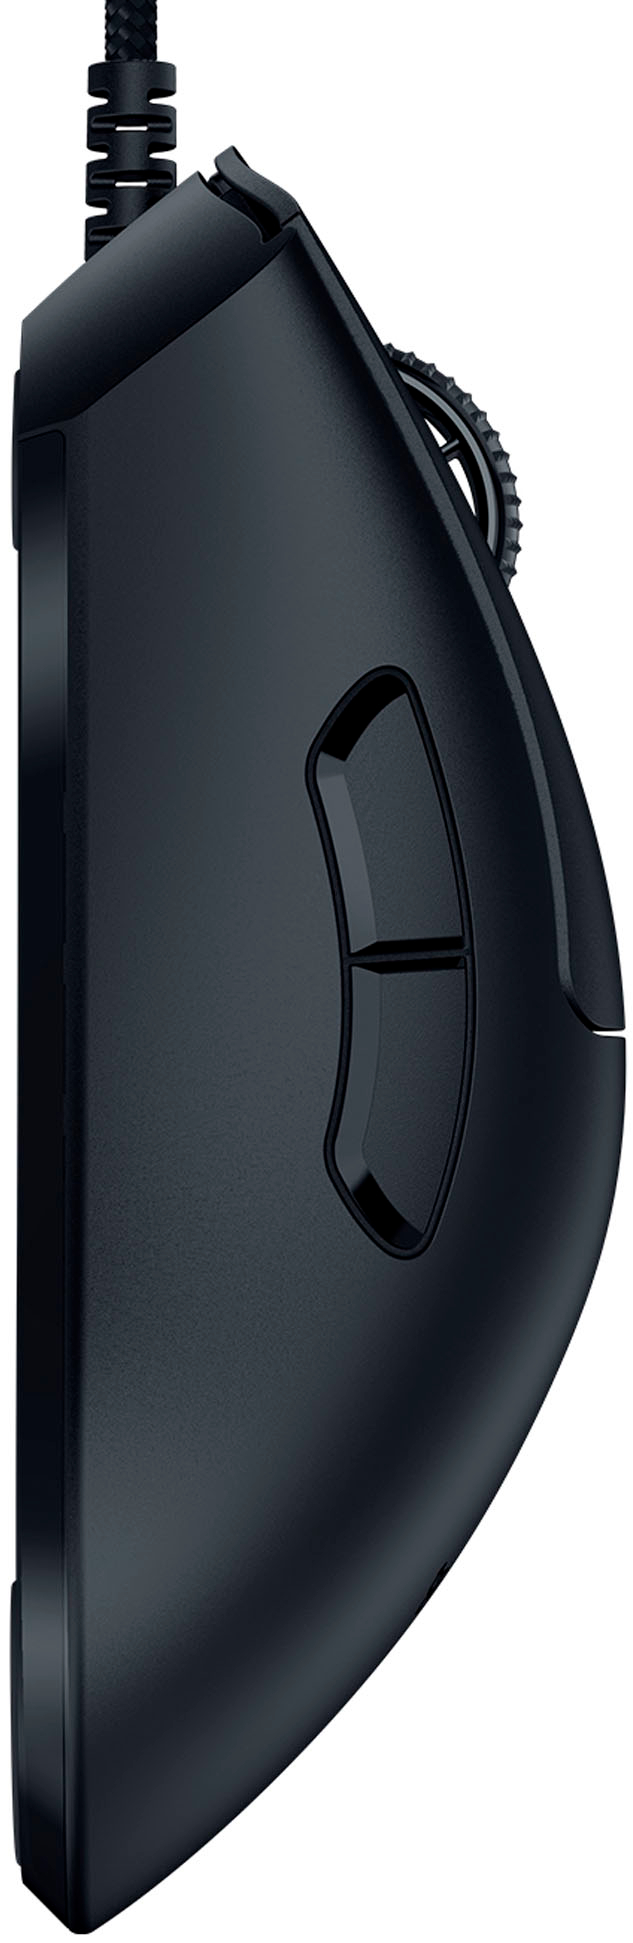 Angle View: Razer - DeathAdder V3 Ultra-lightweight Ergonomic Esports Mouse - Black